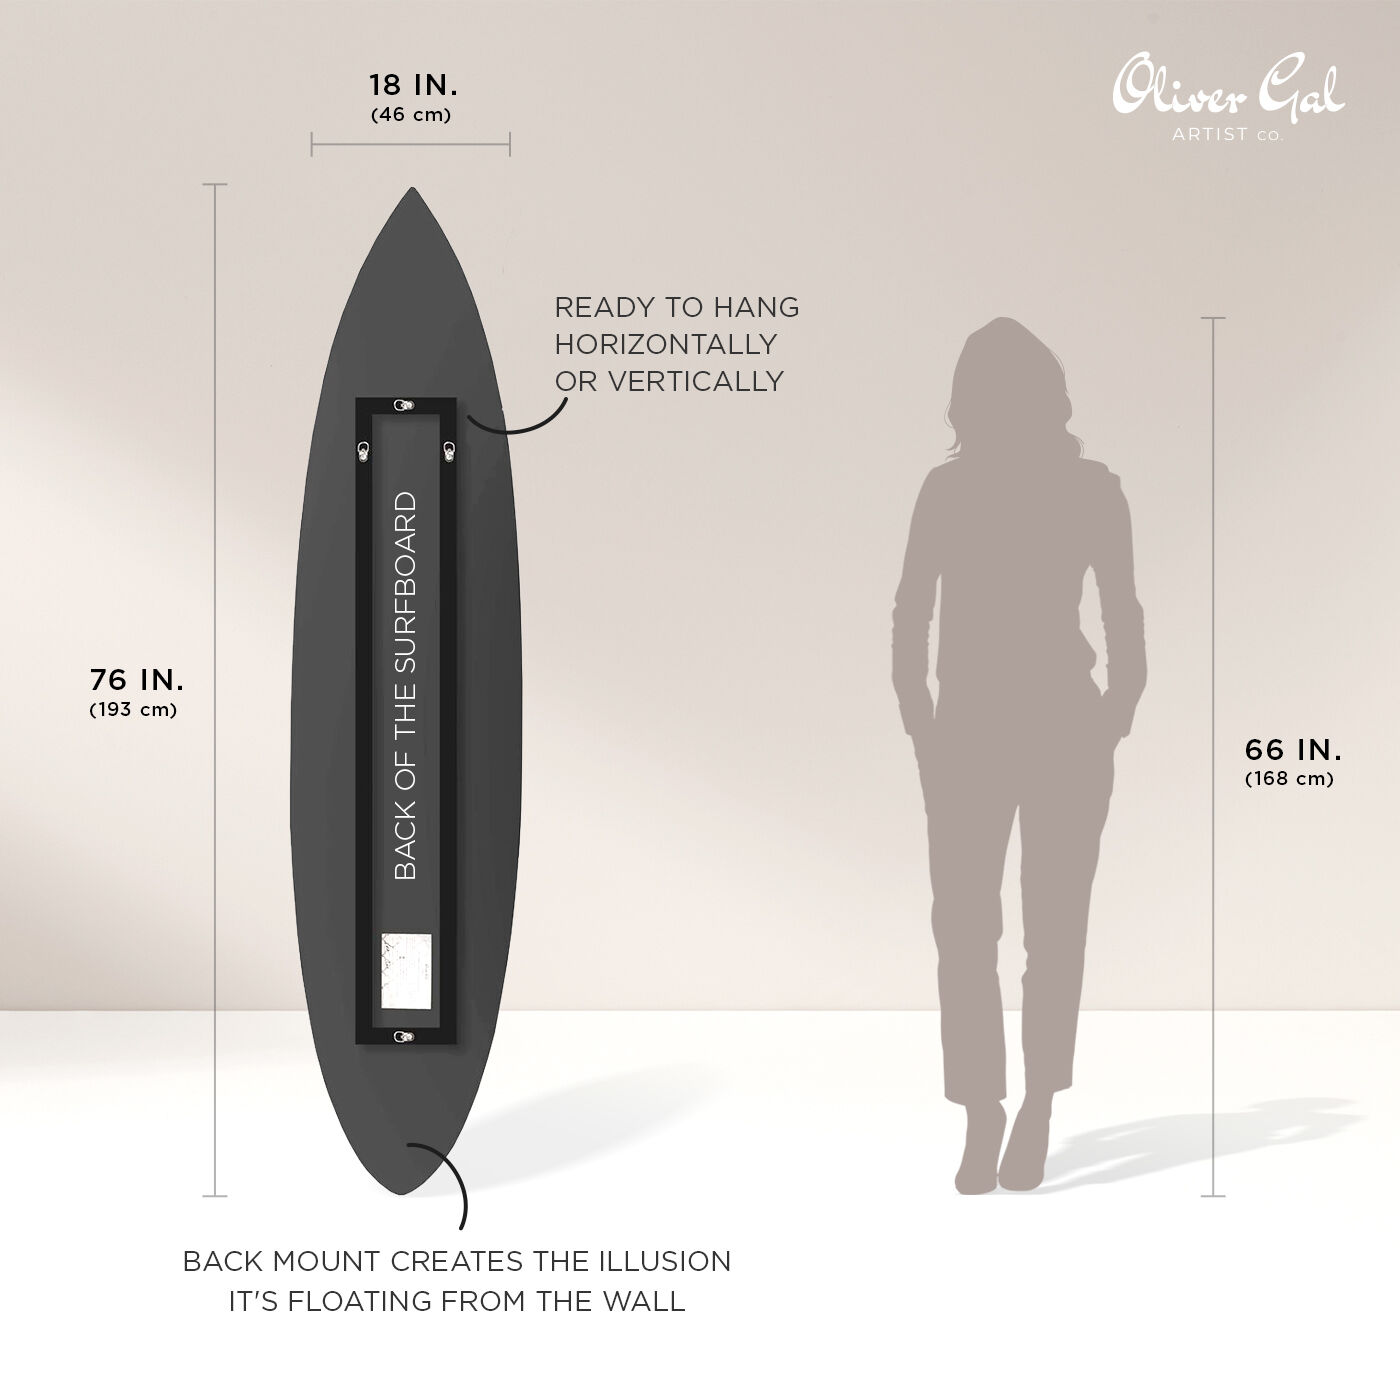 Louis Vuitton Graphite Damier Surfboard